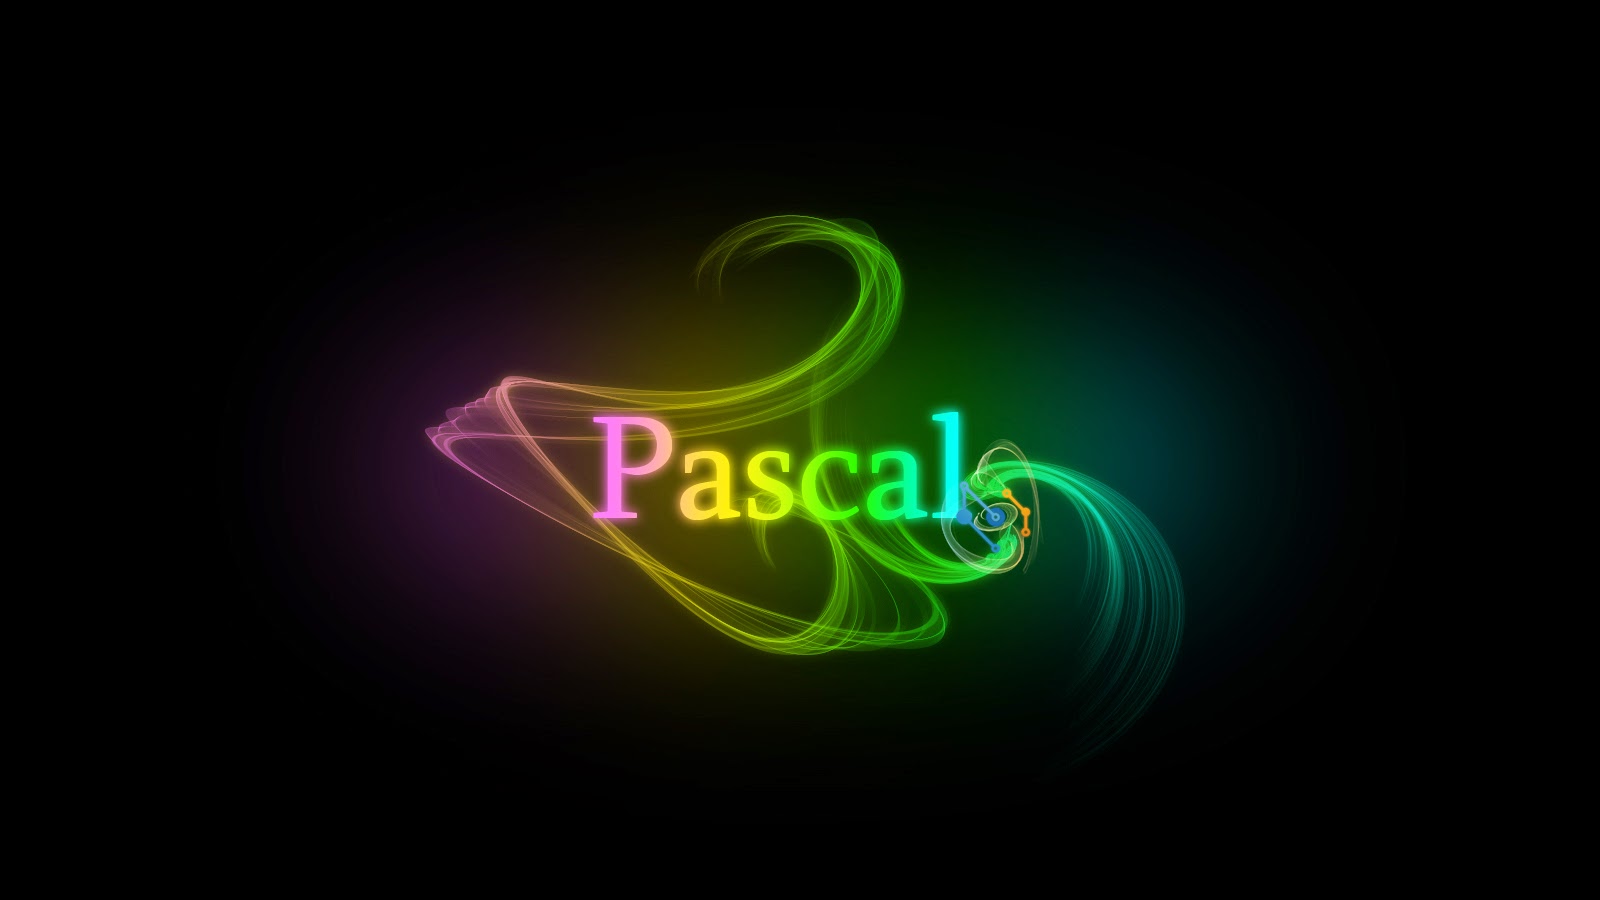 Pascal com. Pascal логотип. Pascal язык программирования. Паскаль язык программирования лого. Паскаль язык программирования картинки.